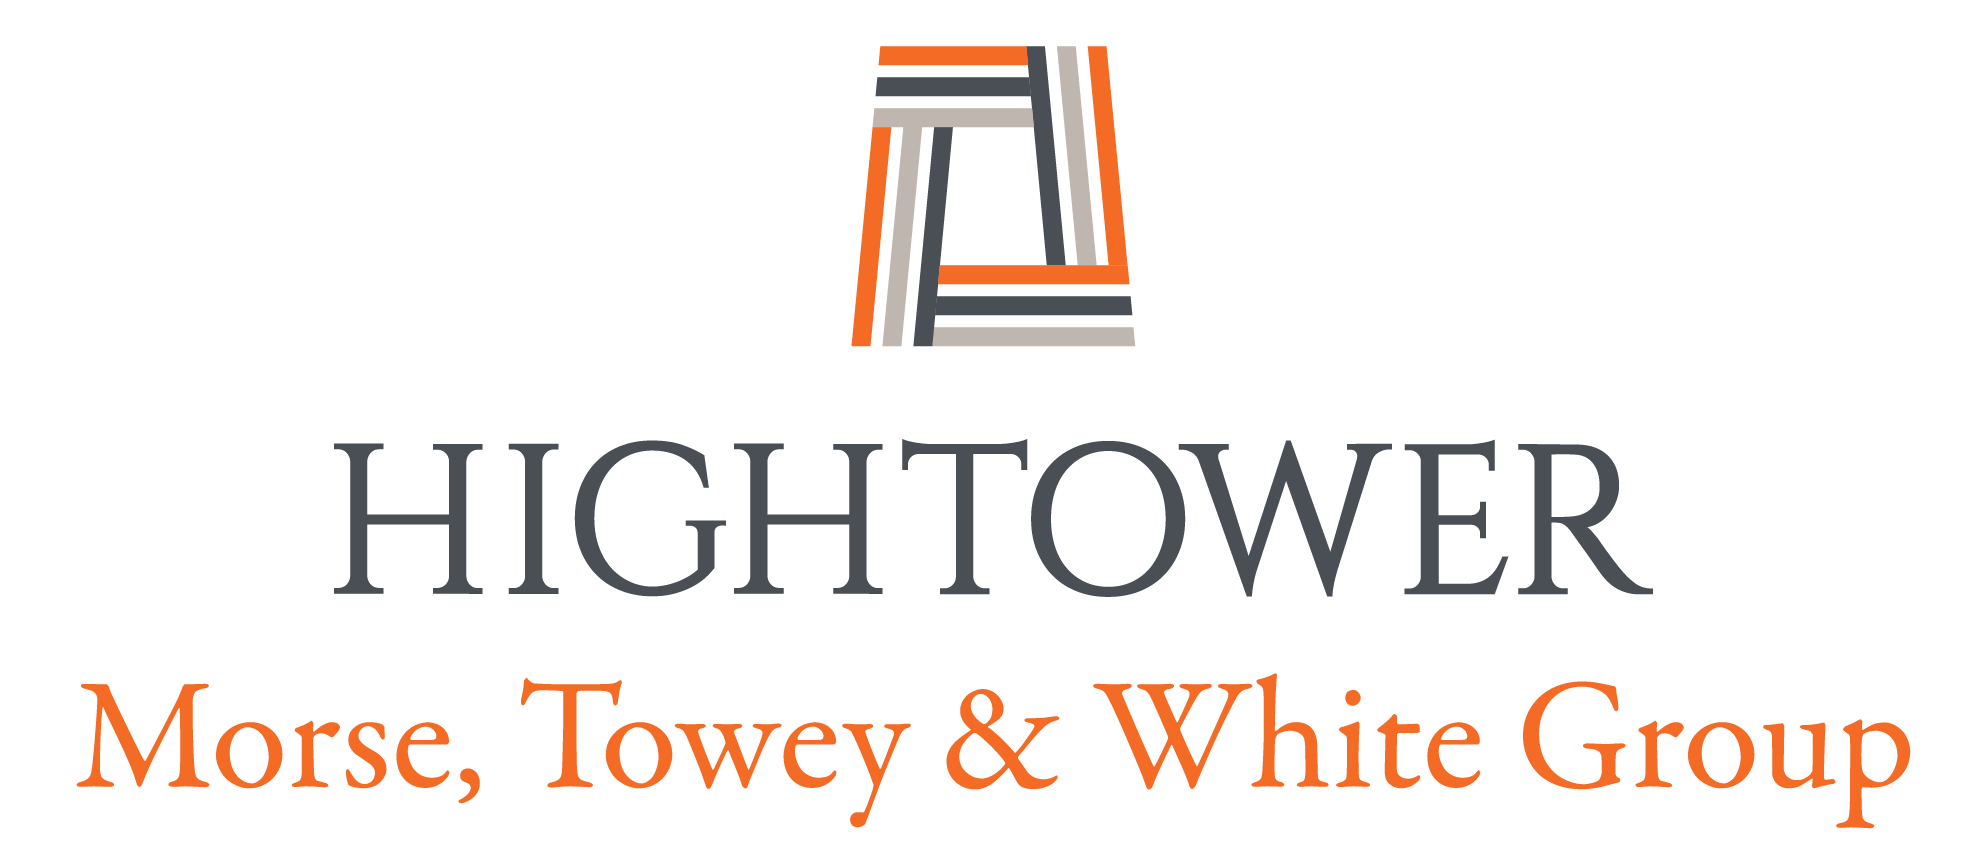 Hightower Morse, Towey & White Group Logo